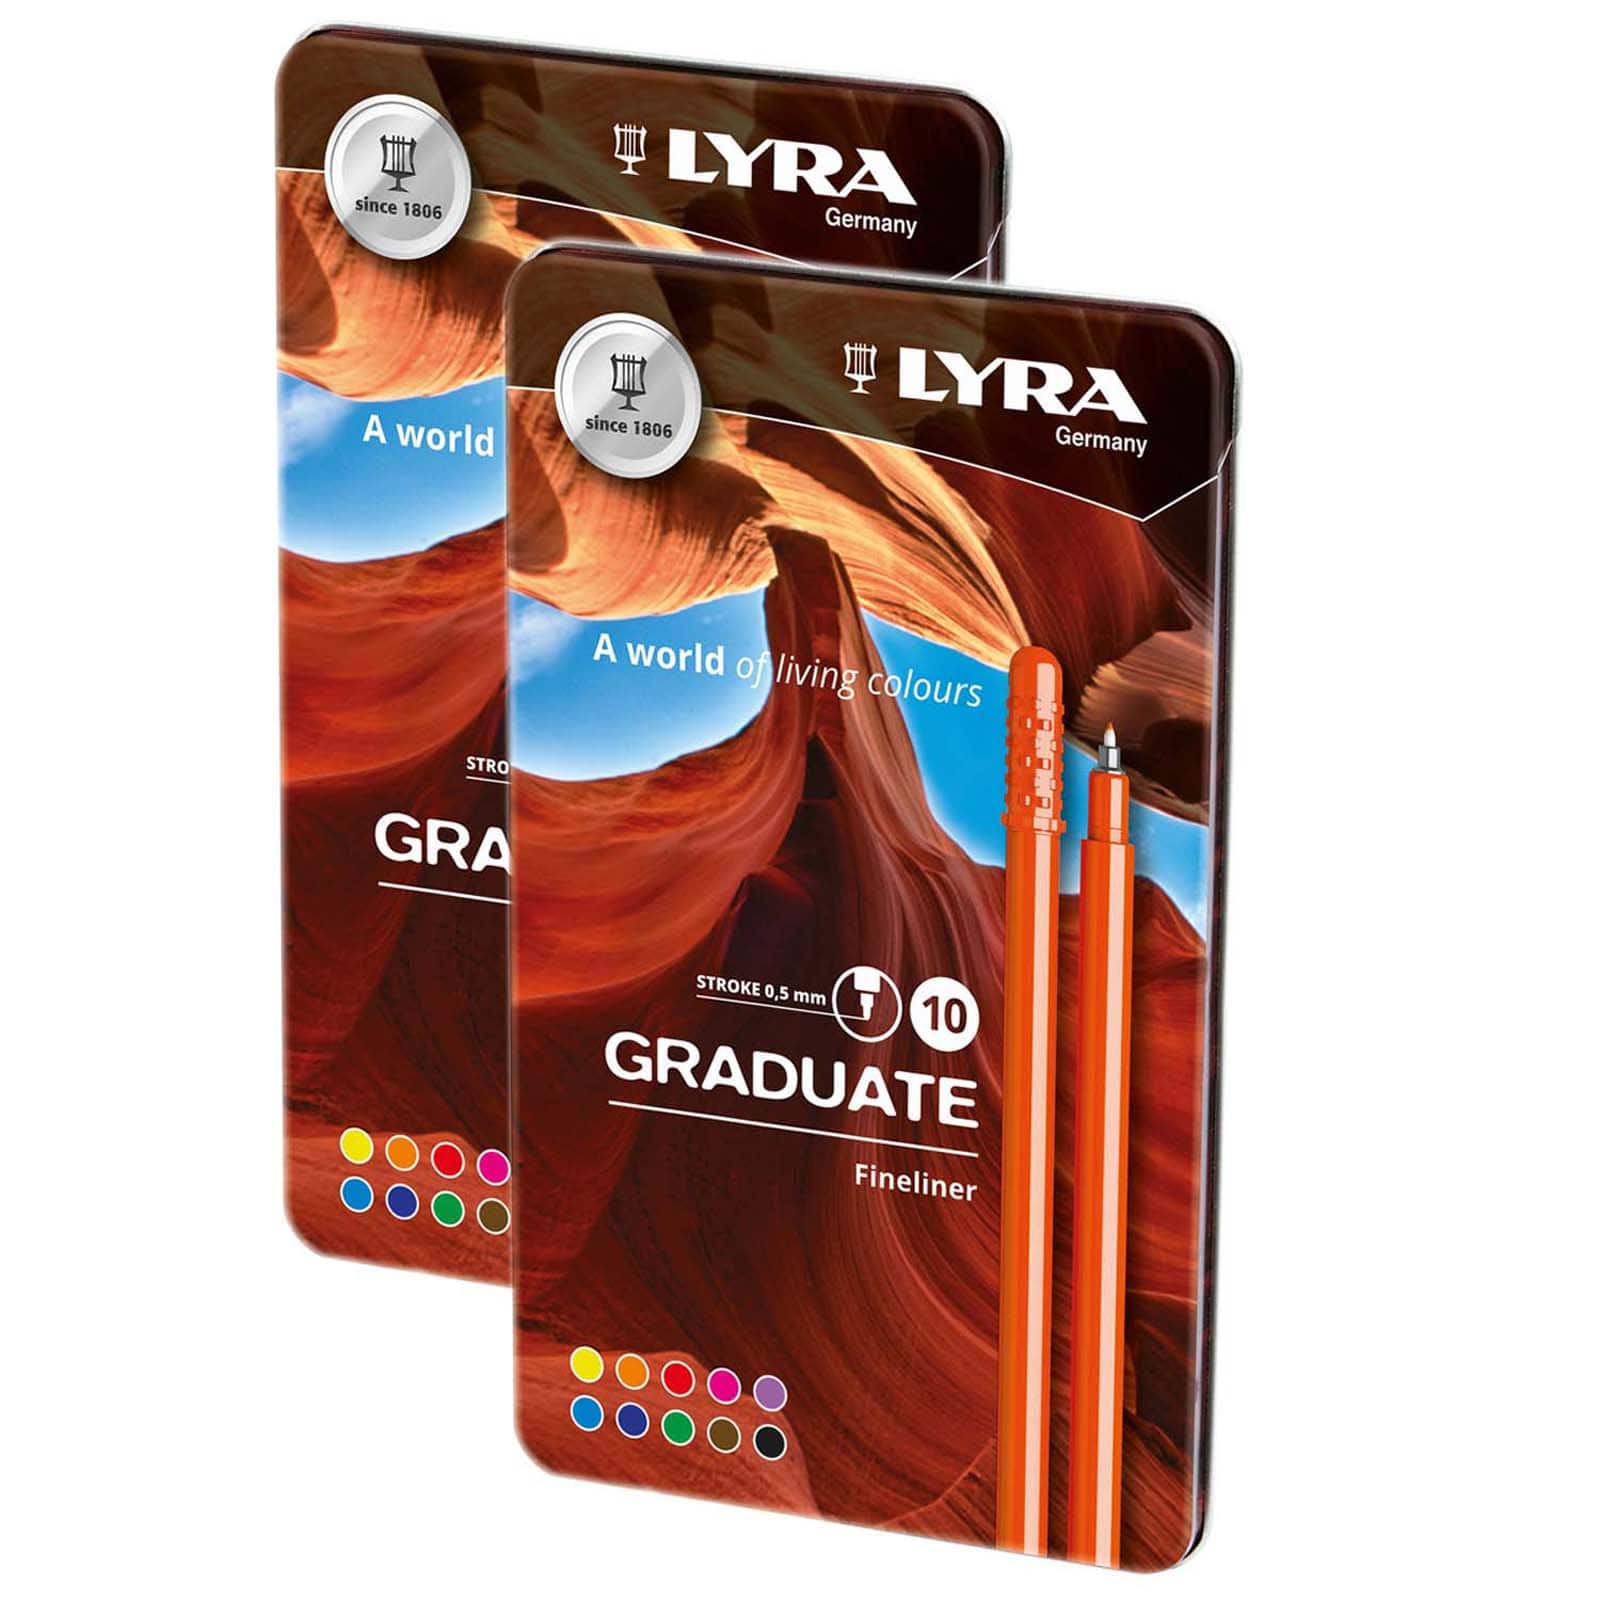 Lyra Graduate Fineliner Markers